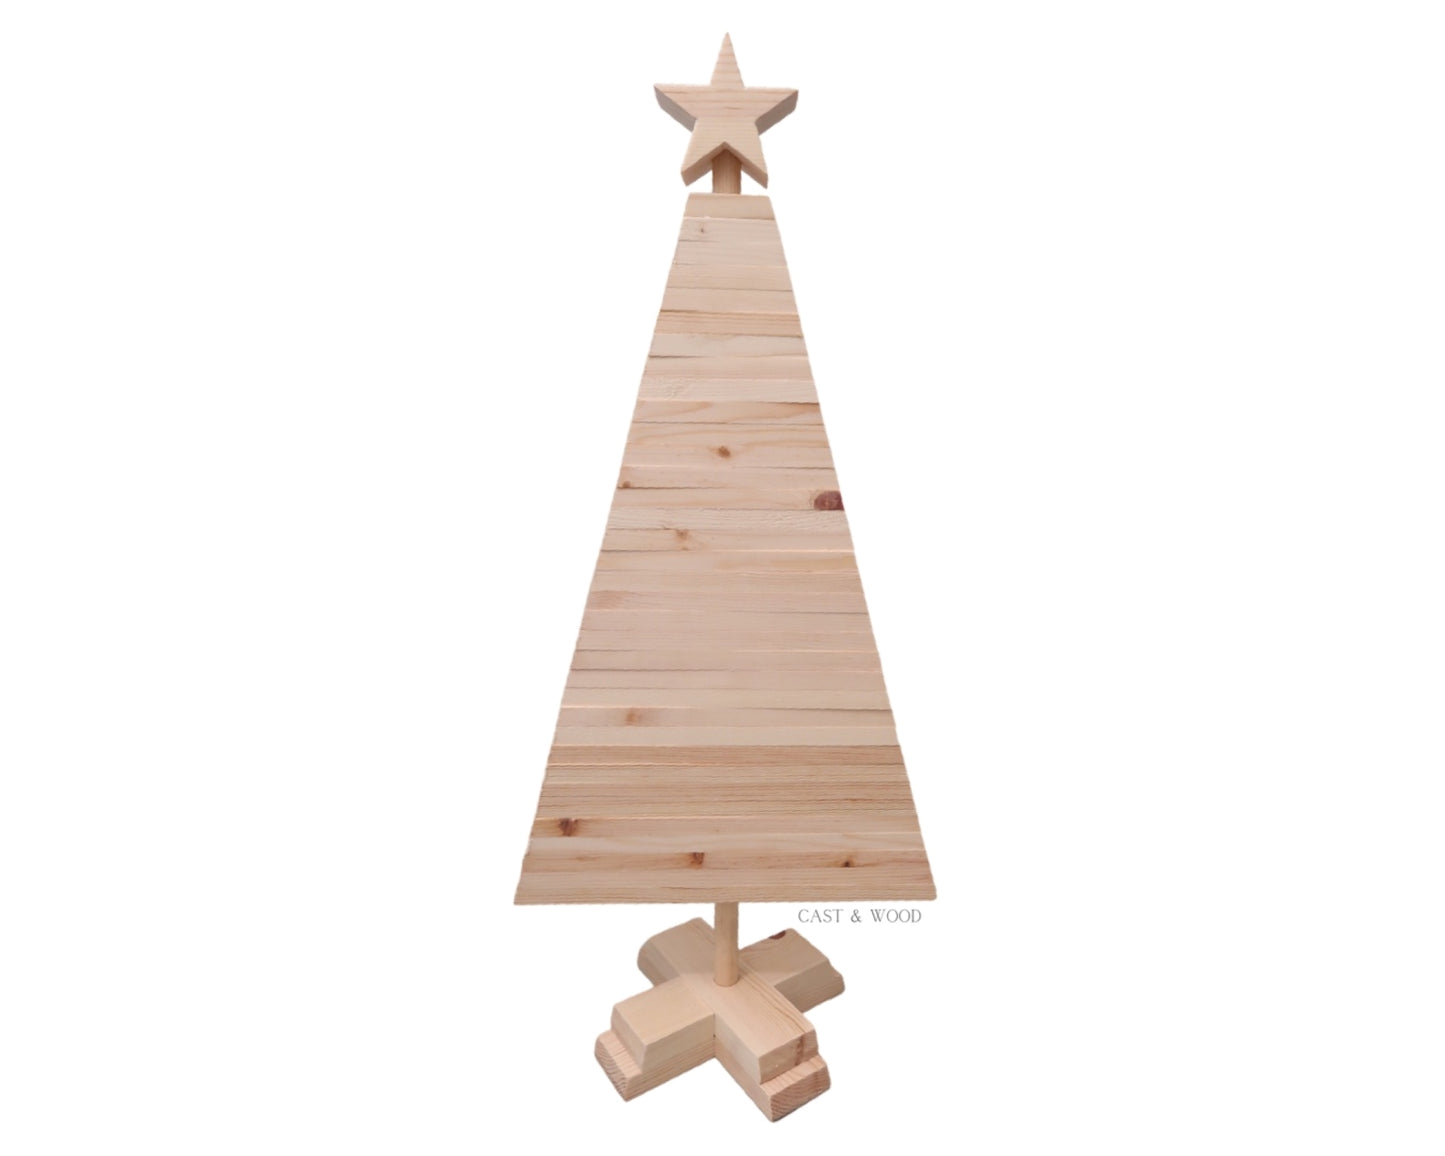 Medium Wooden Christmas Tree - 70cm